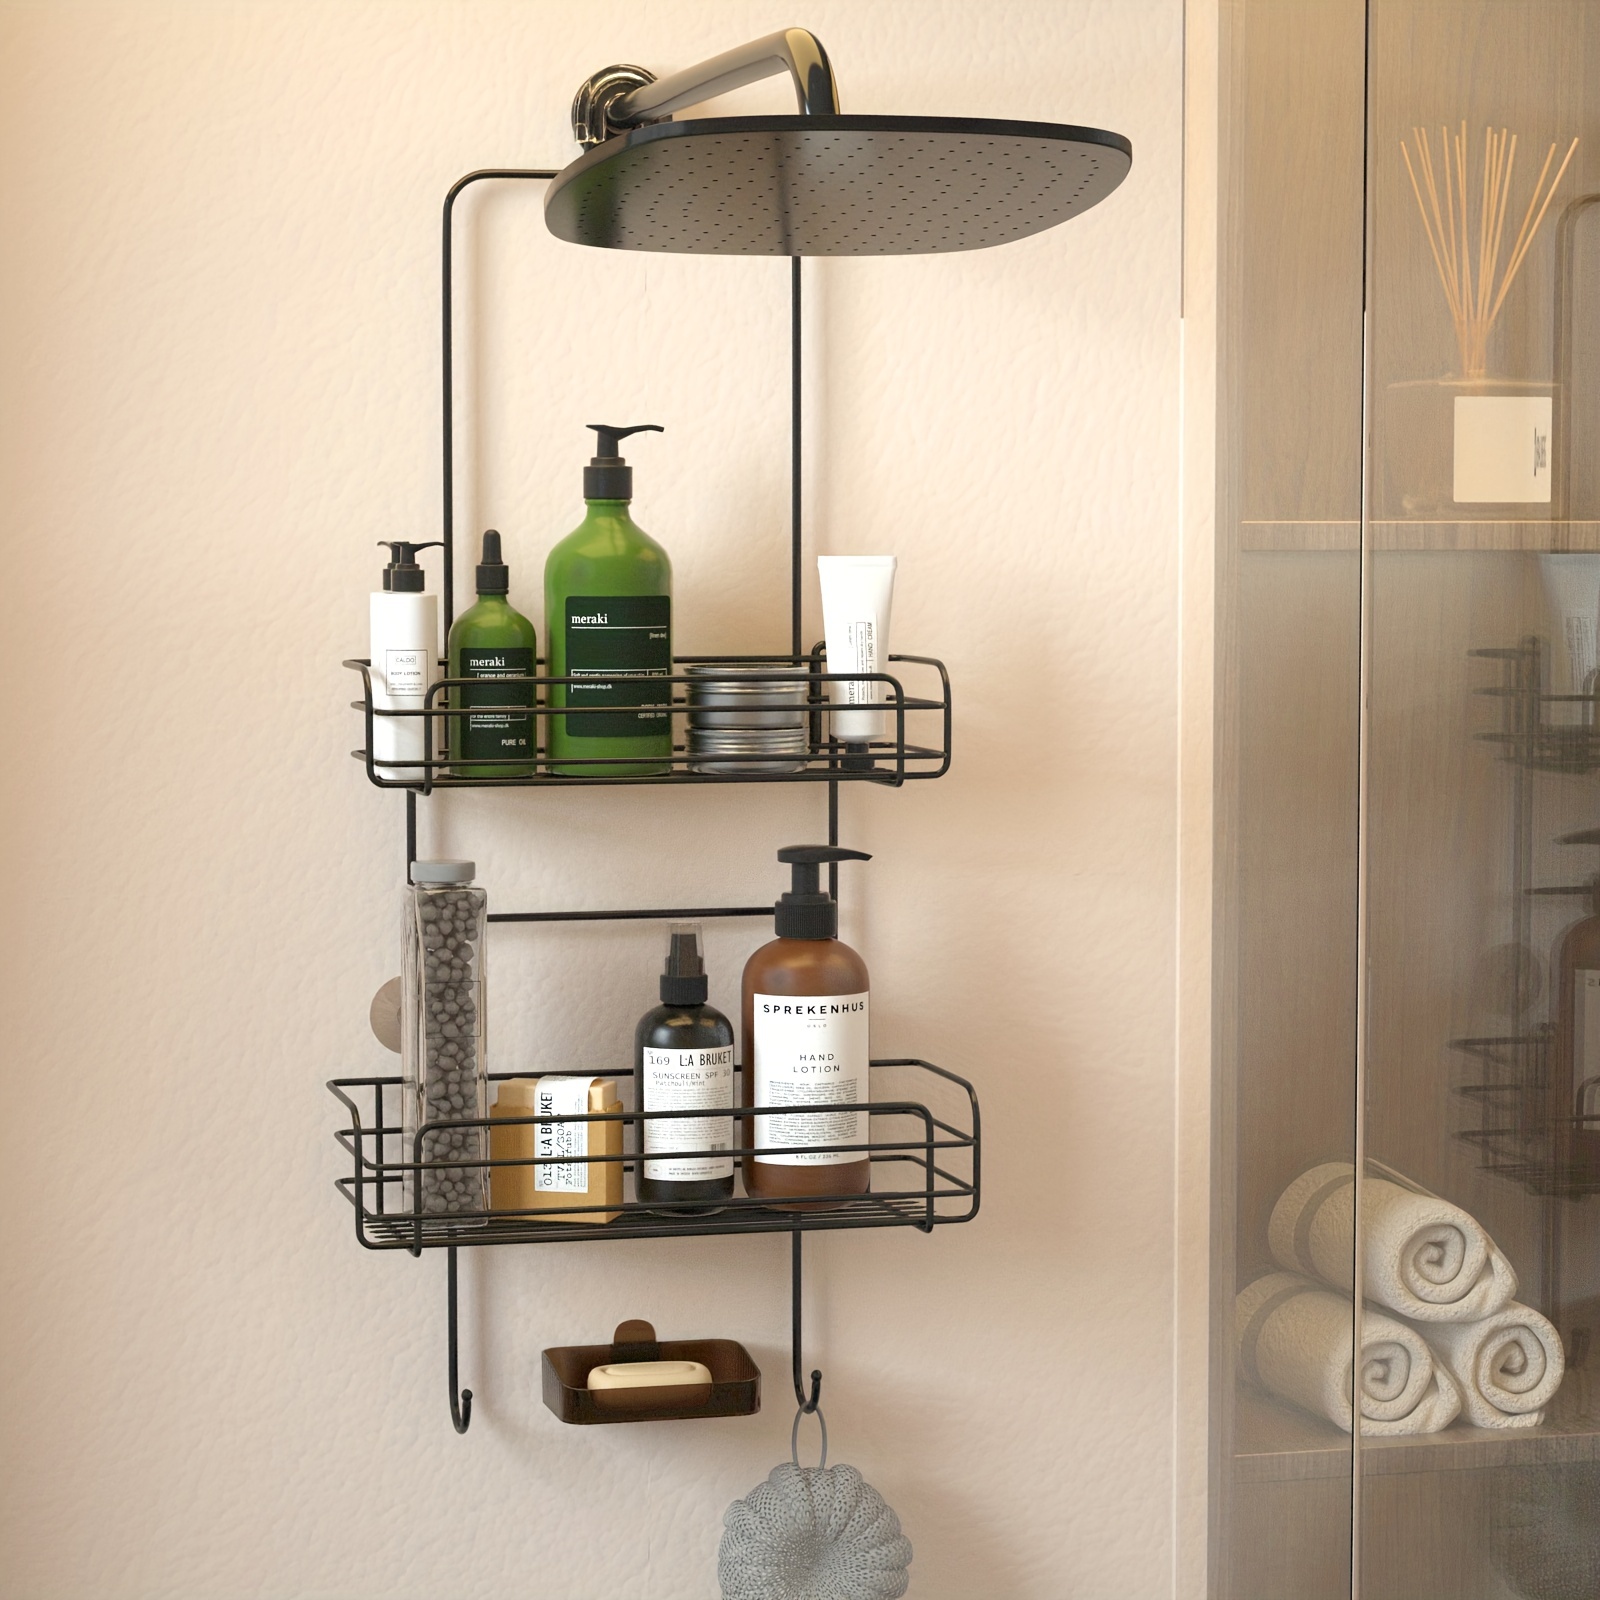 Stainless Steel Bathroom Shelf Hanging Shower Head Caddy Holder